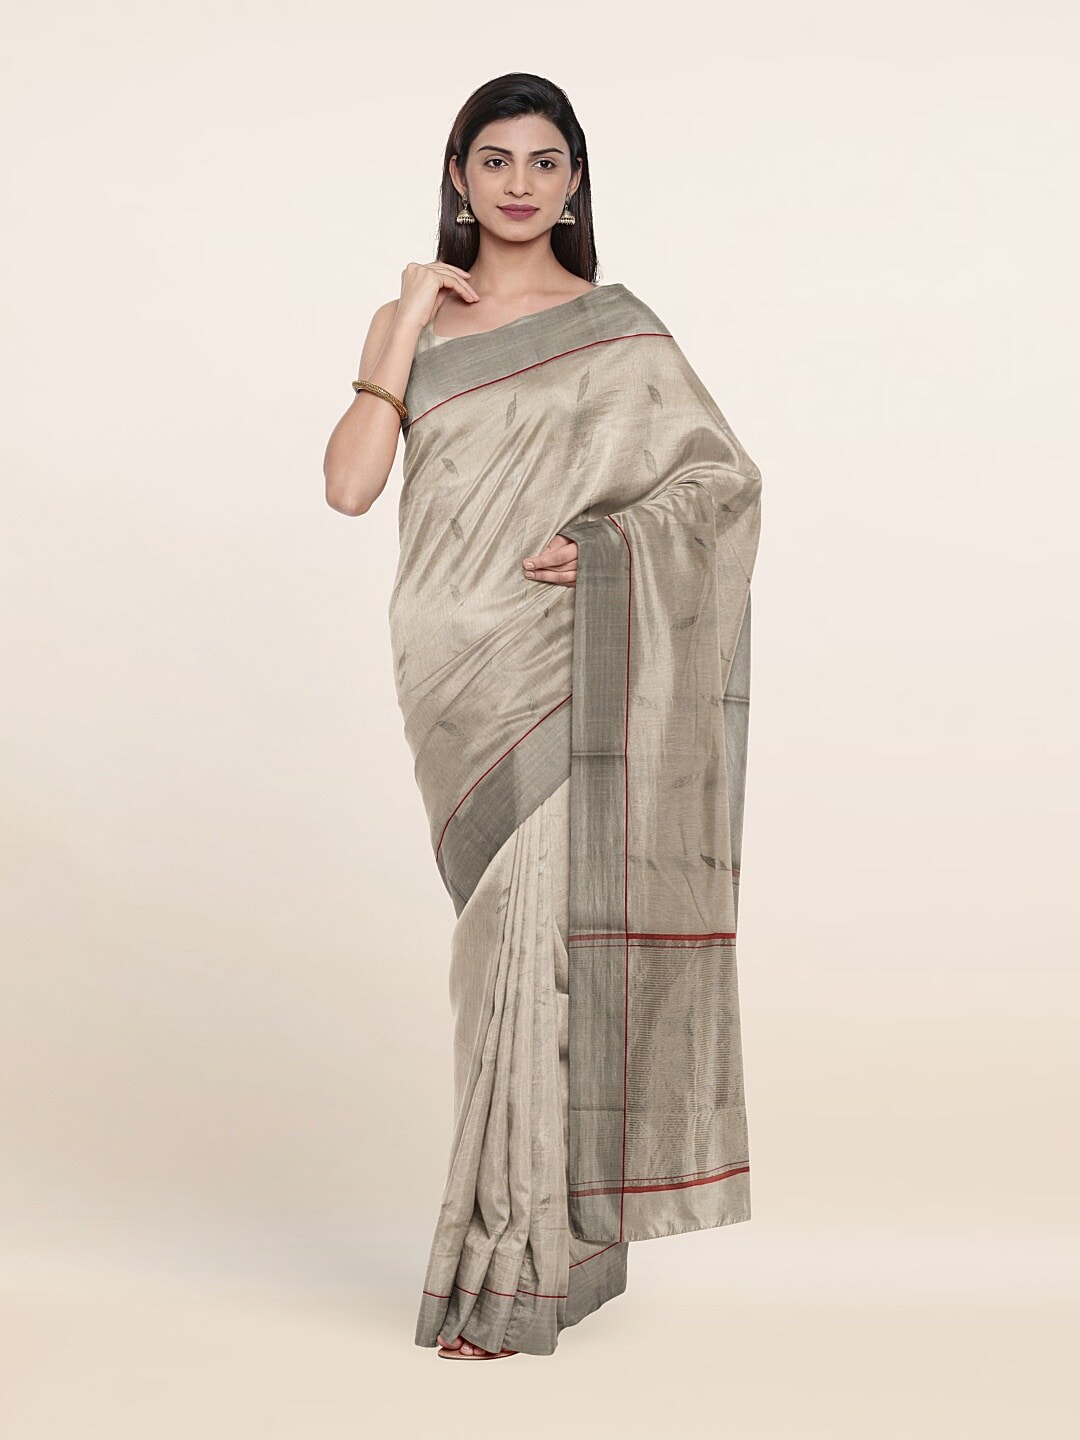 Pothys White & Gold-Toned Striped Zari Silk Cotton Saree Price in India